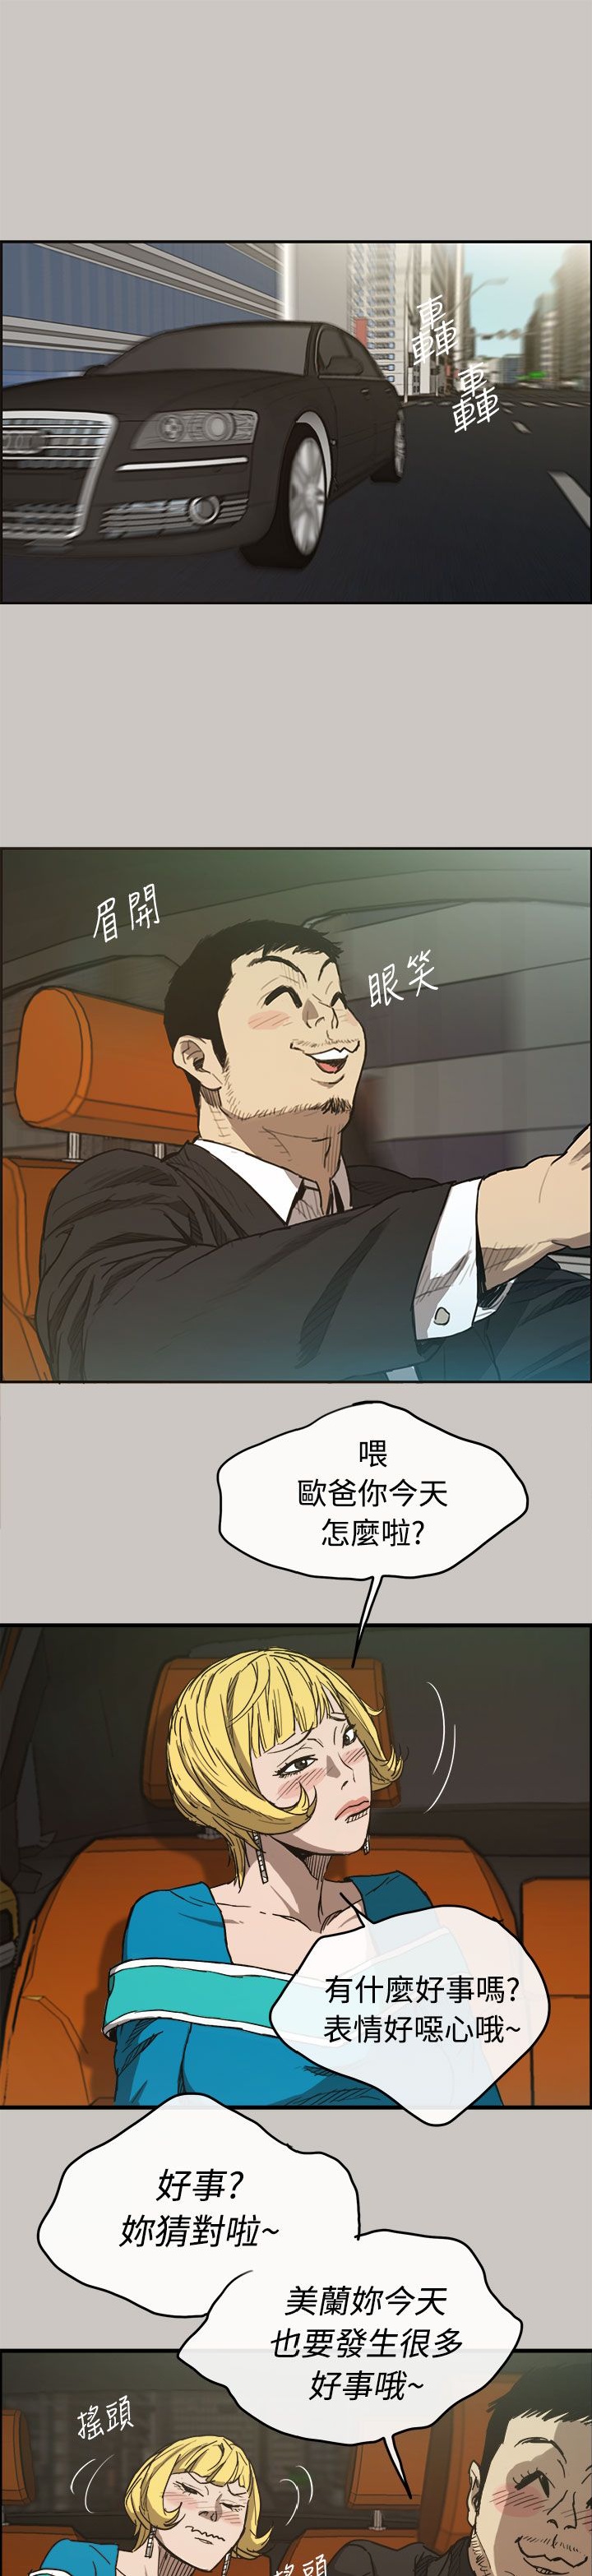 《MAD:小姐与司机》漫画 第10话